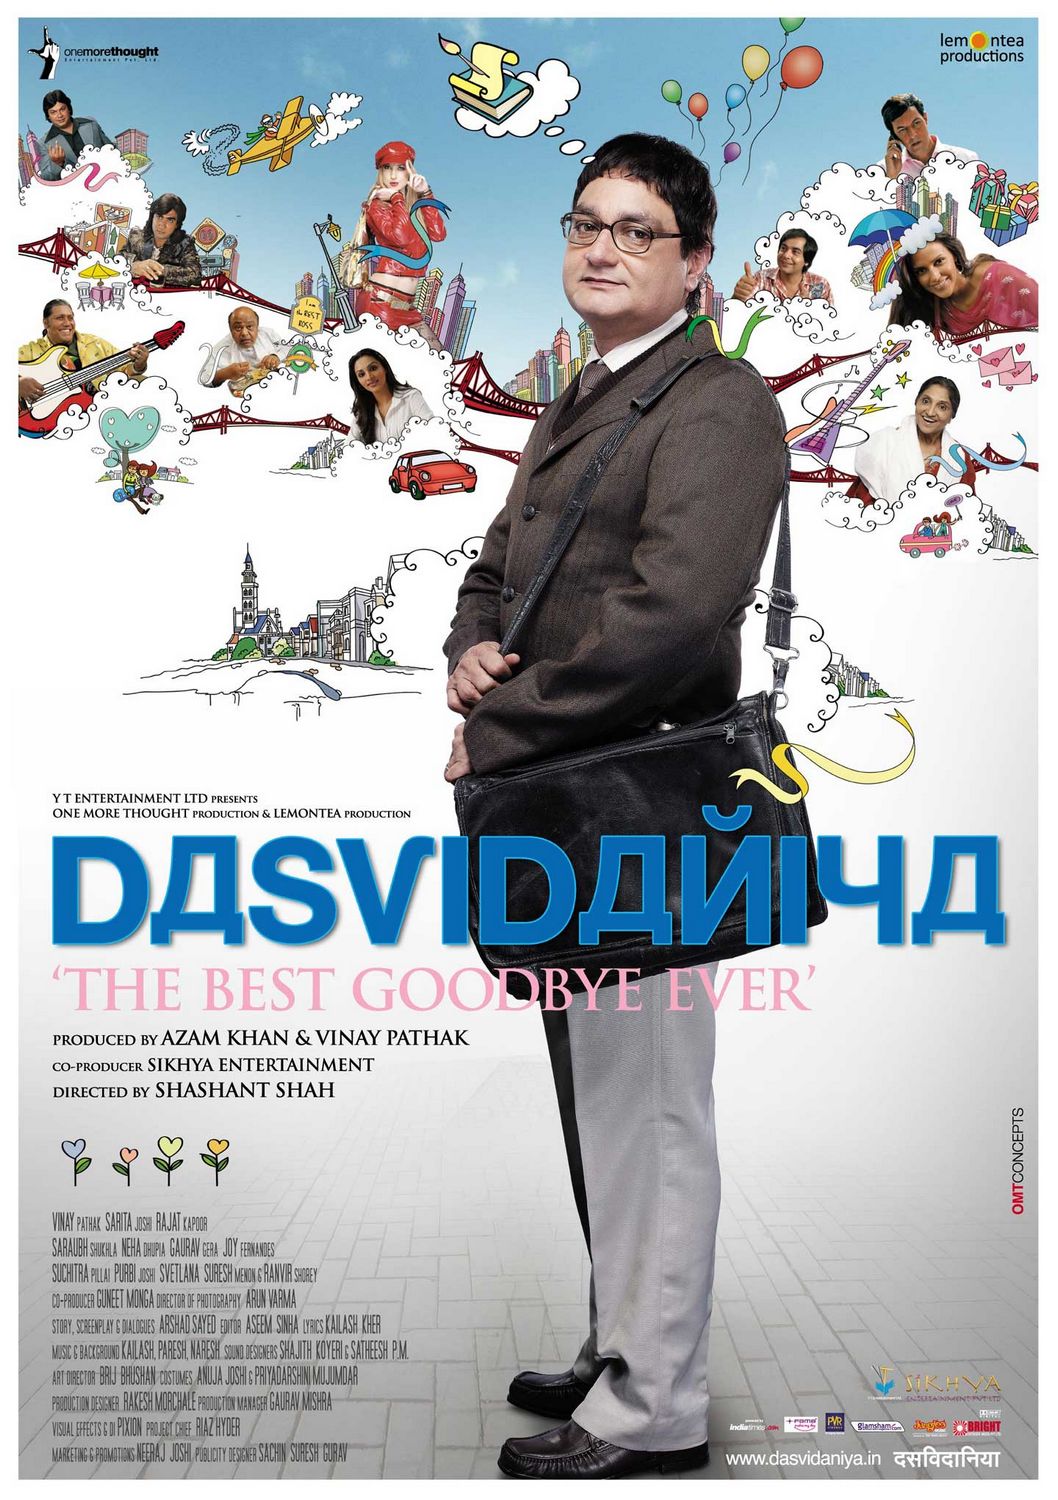 Extra Large Movie Poster Image for Dasvidaniya (#2 of 4)